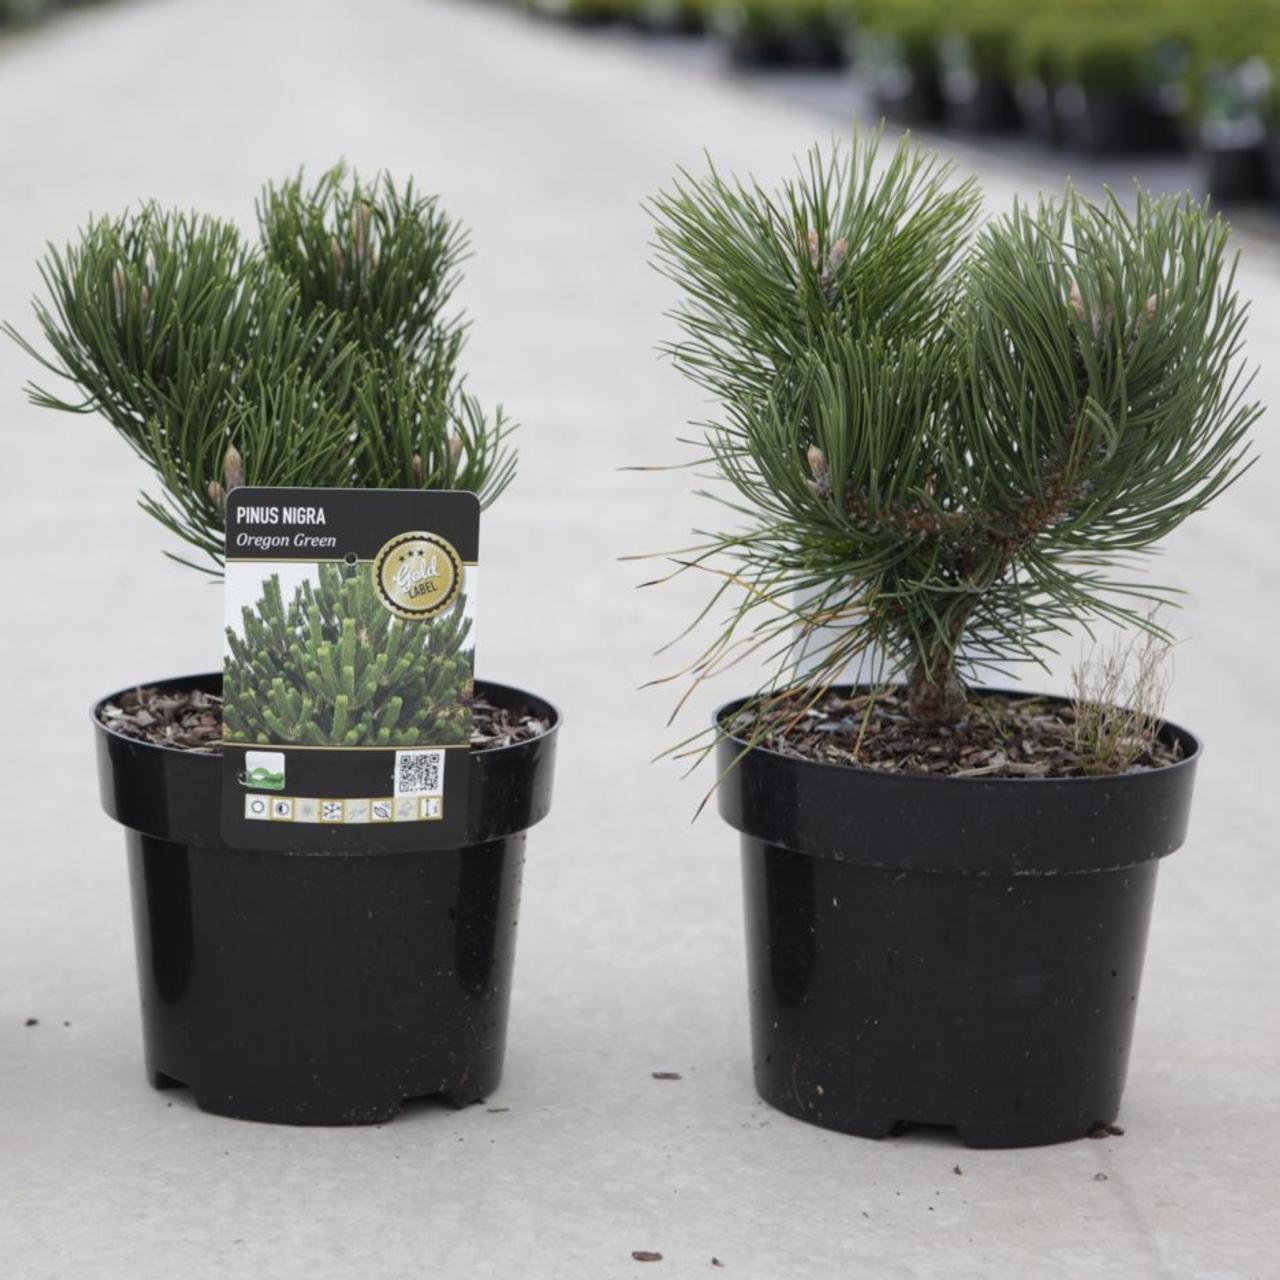 Pinus nigra 'Oregon Green' plant